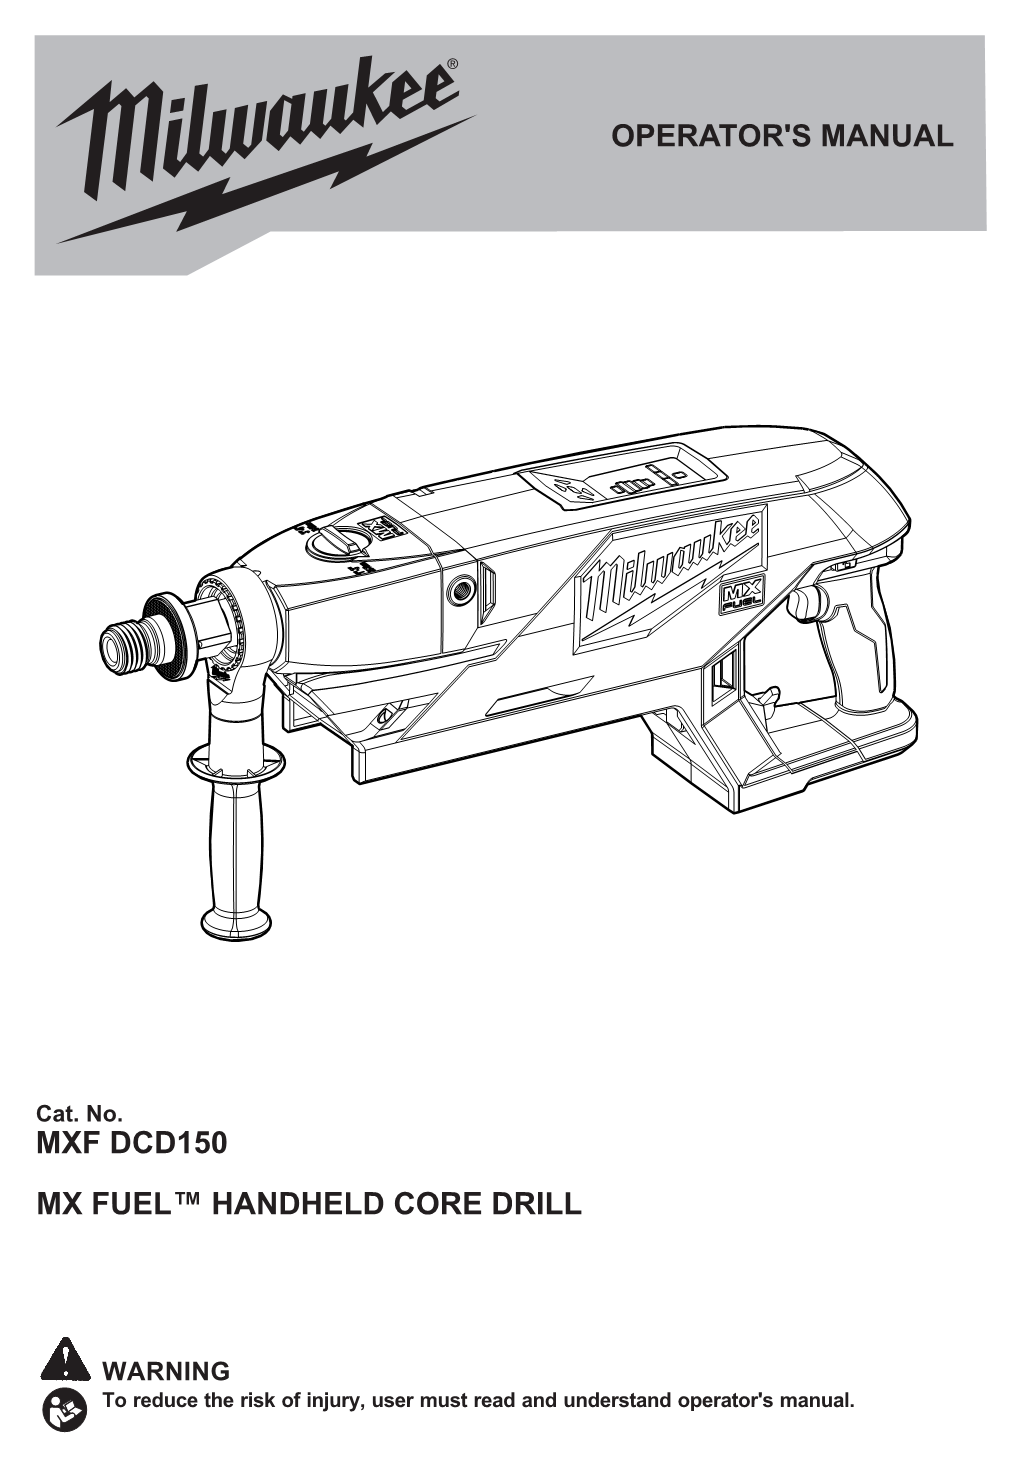 Operator's Manual Mxf Dcd150 Mx Fuel™ Handheld